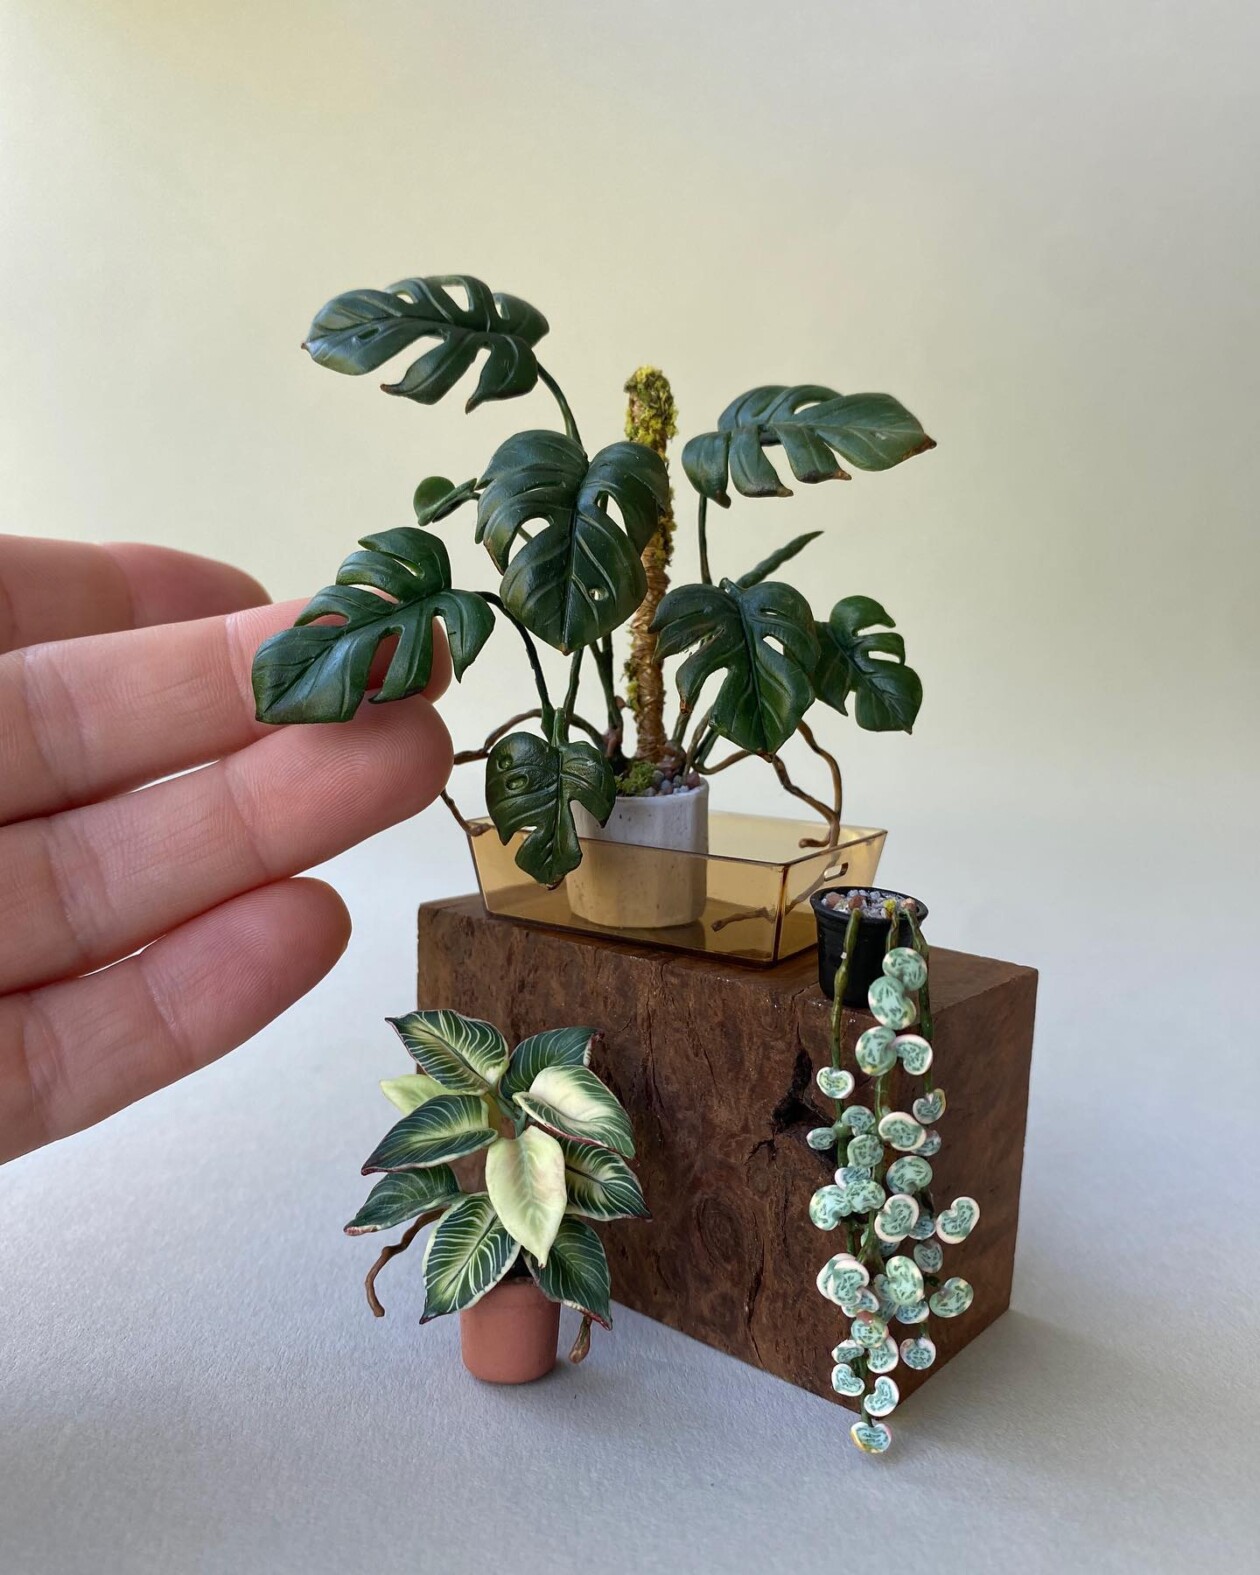 Handmade Miniature Polymer Clay Plants By Astrid Wilk (2)